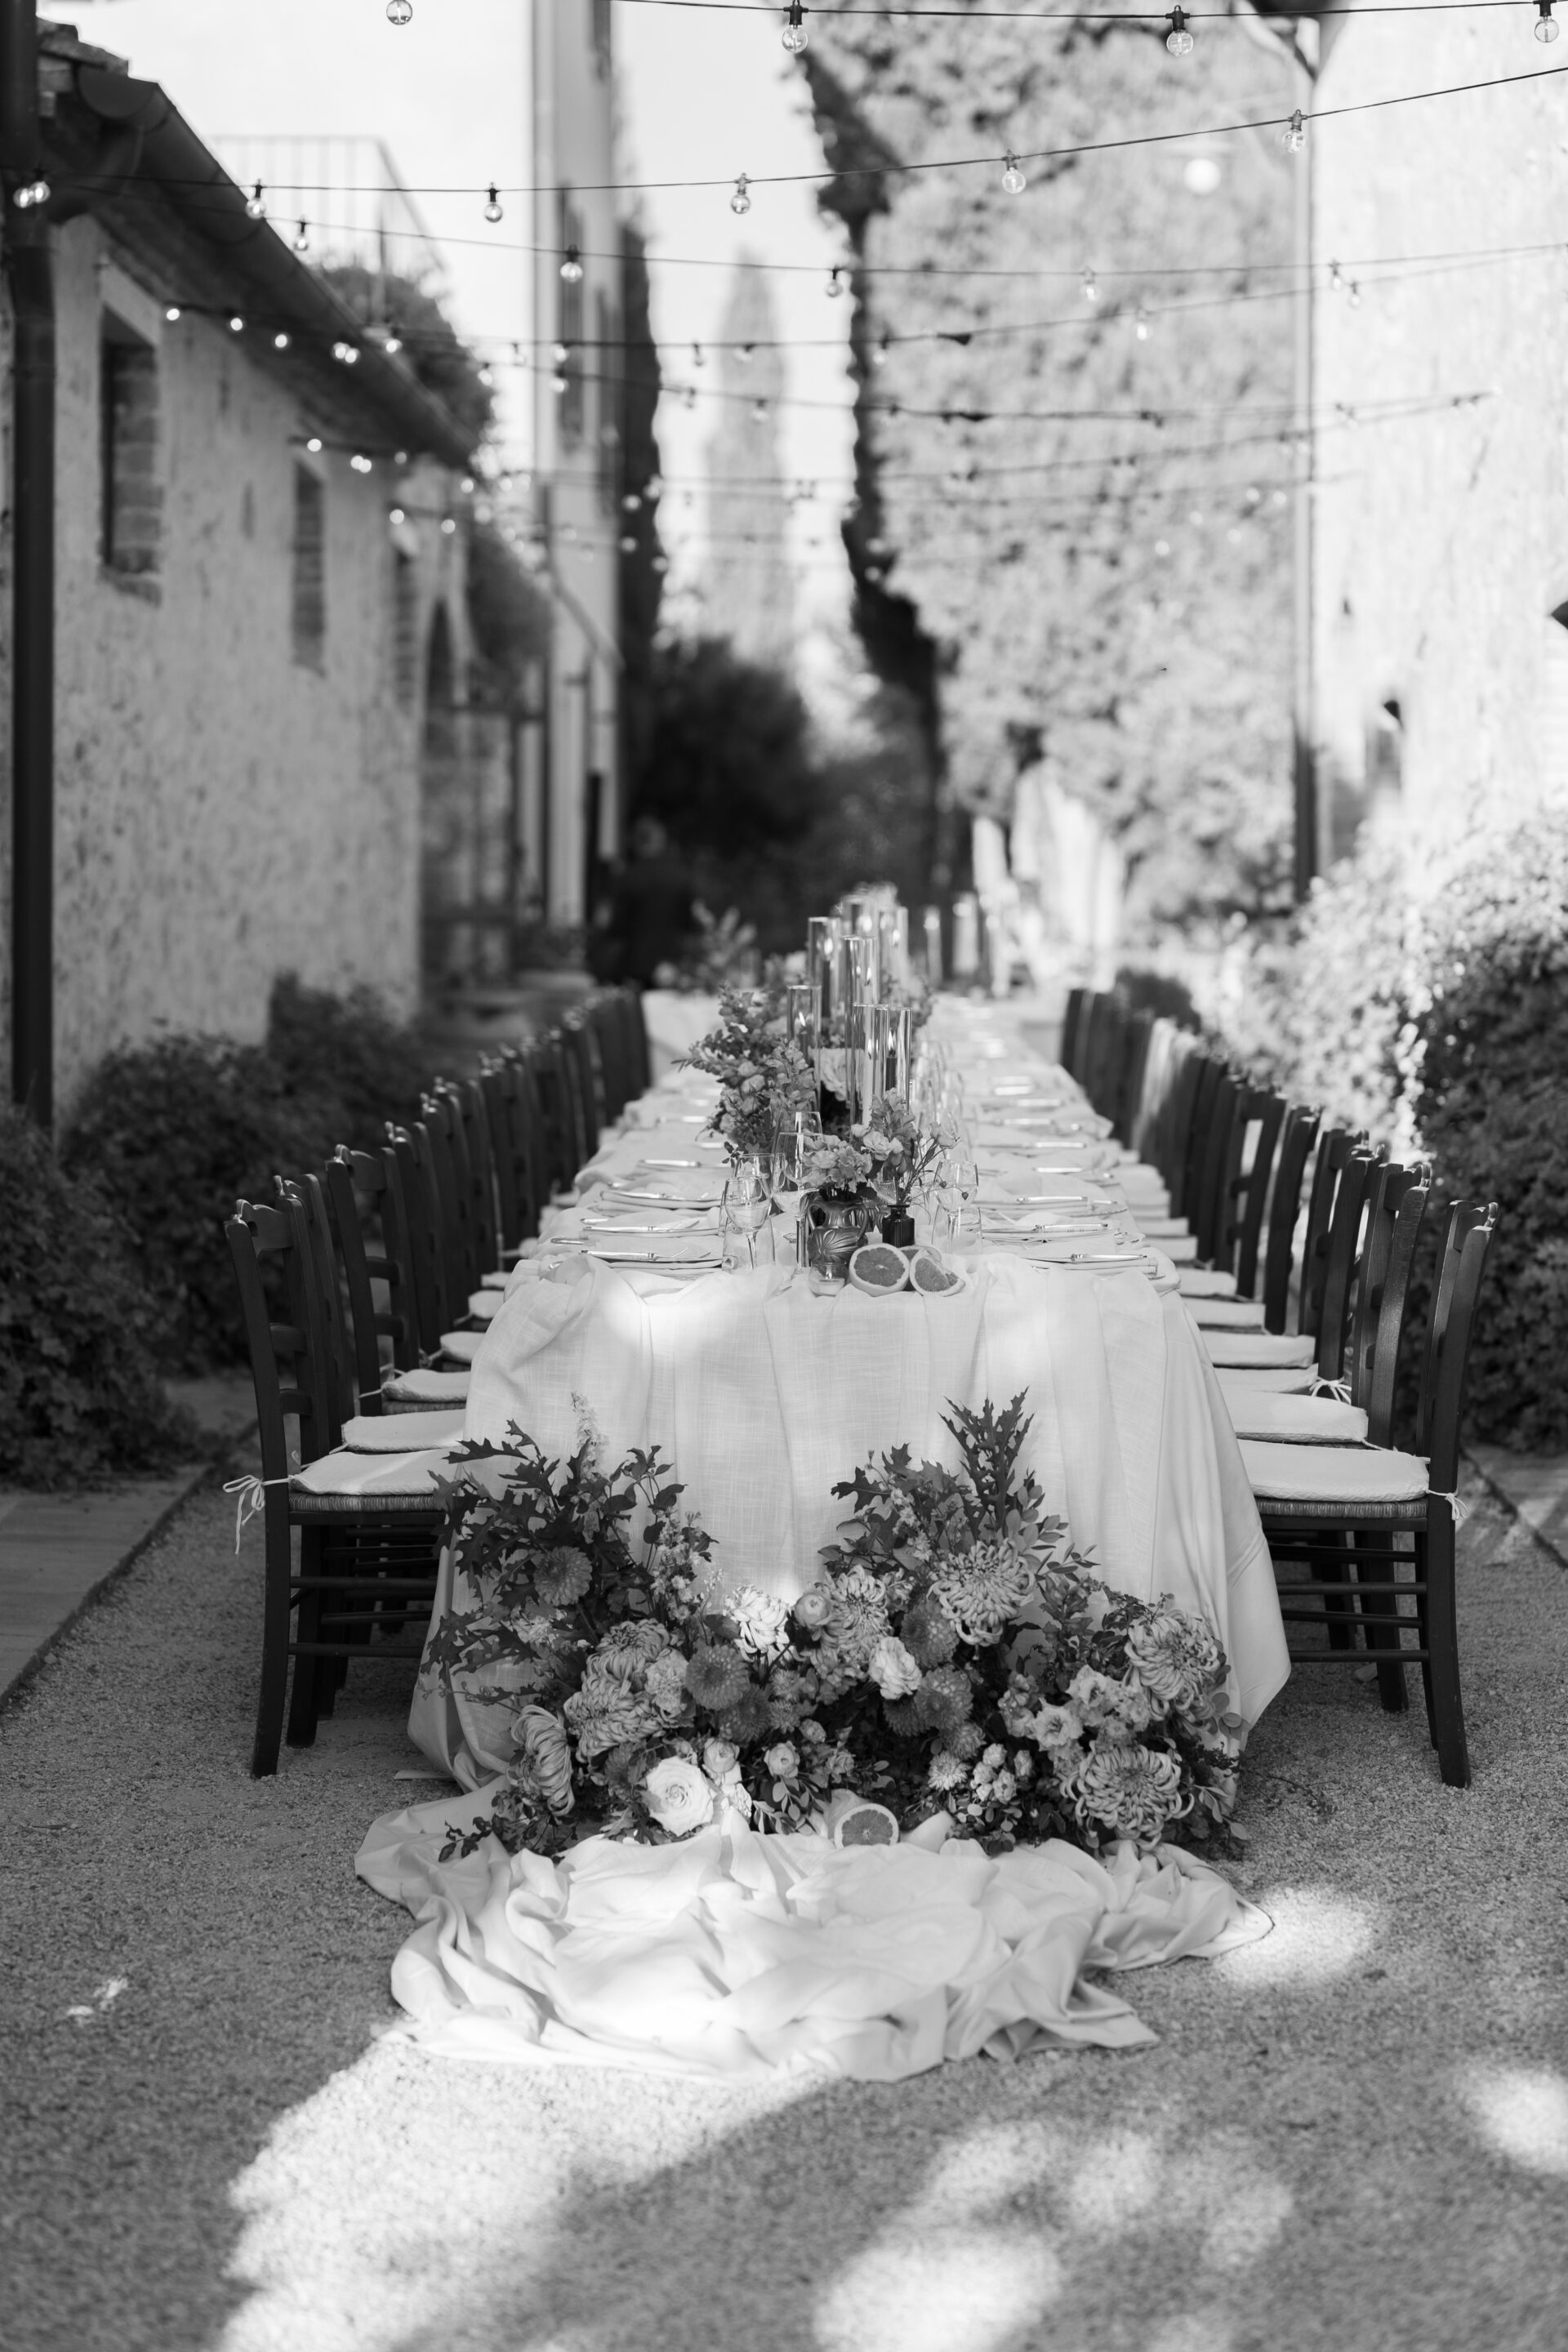 Beautiful tablescape at luxury Tuscany wedding